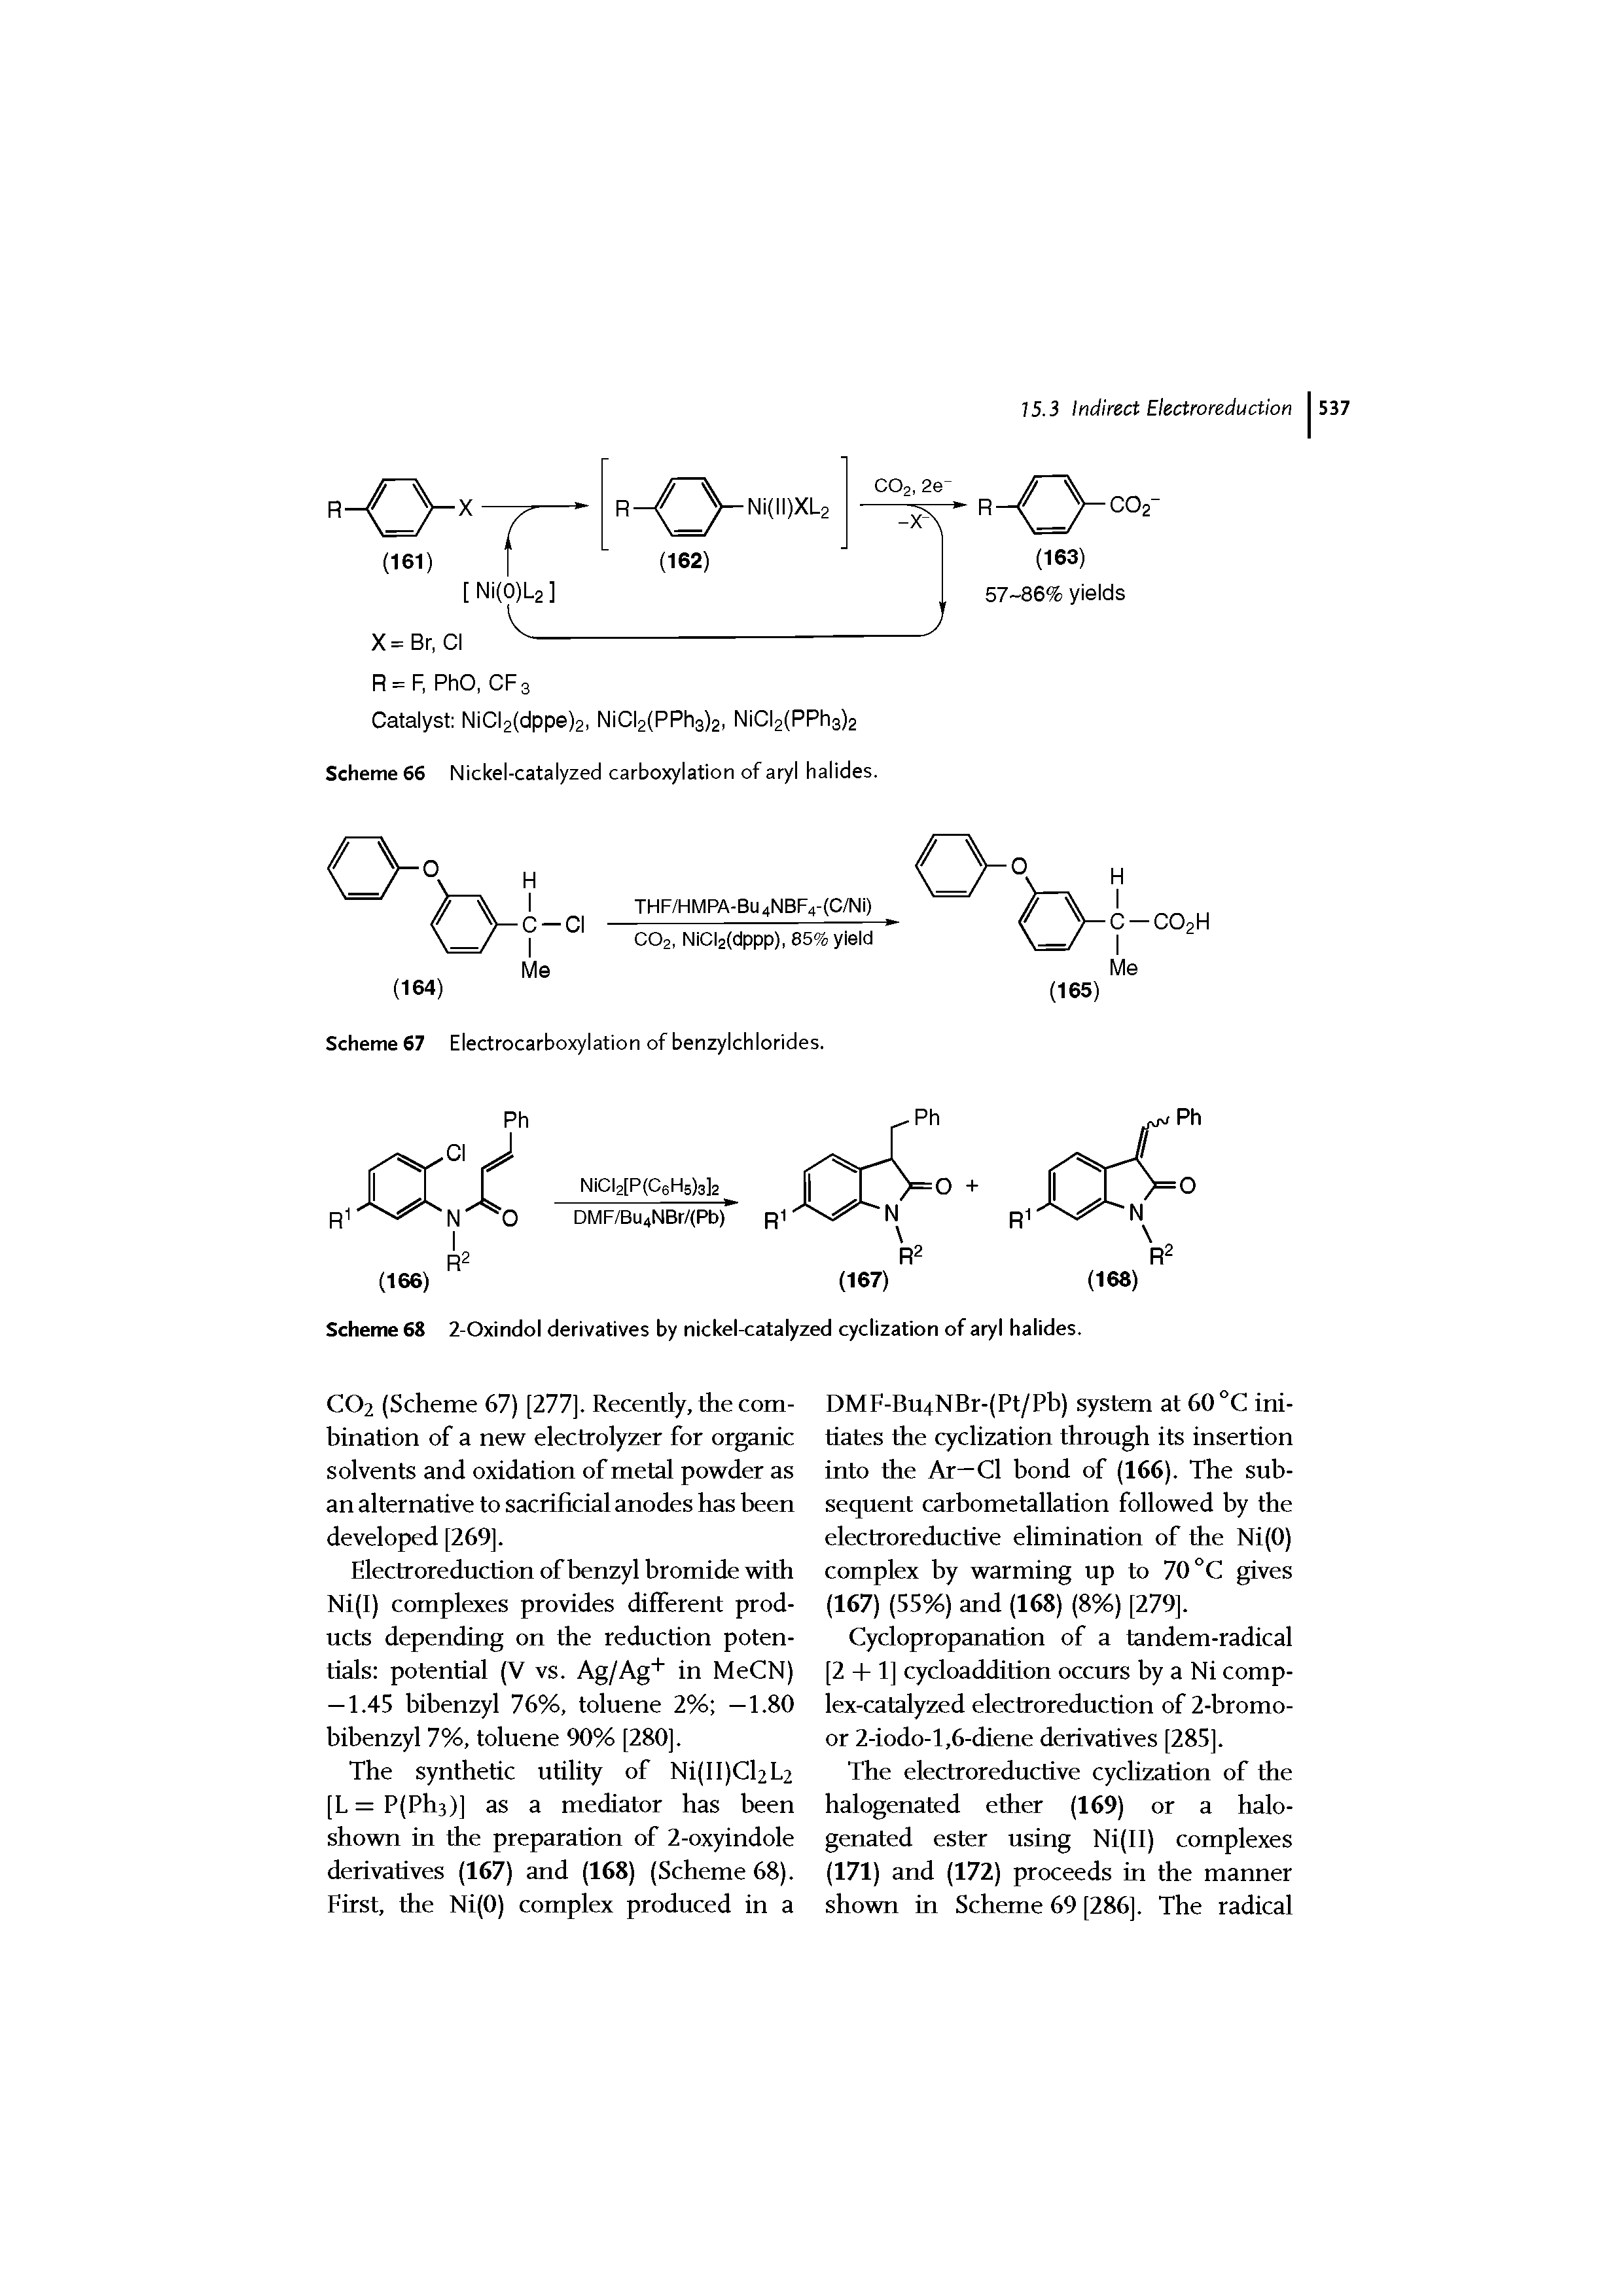 Scheme 68 2-Oxindol derivatives by nickel-catalyzed cyclization of aryl halides.